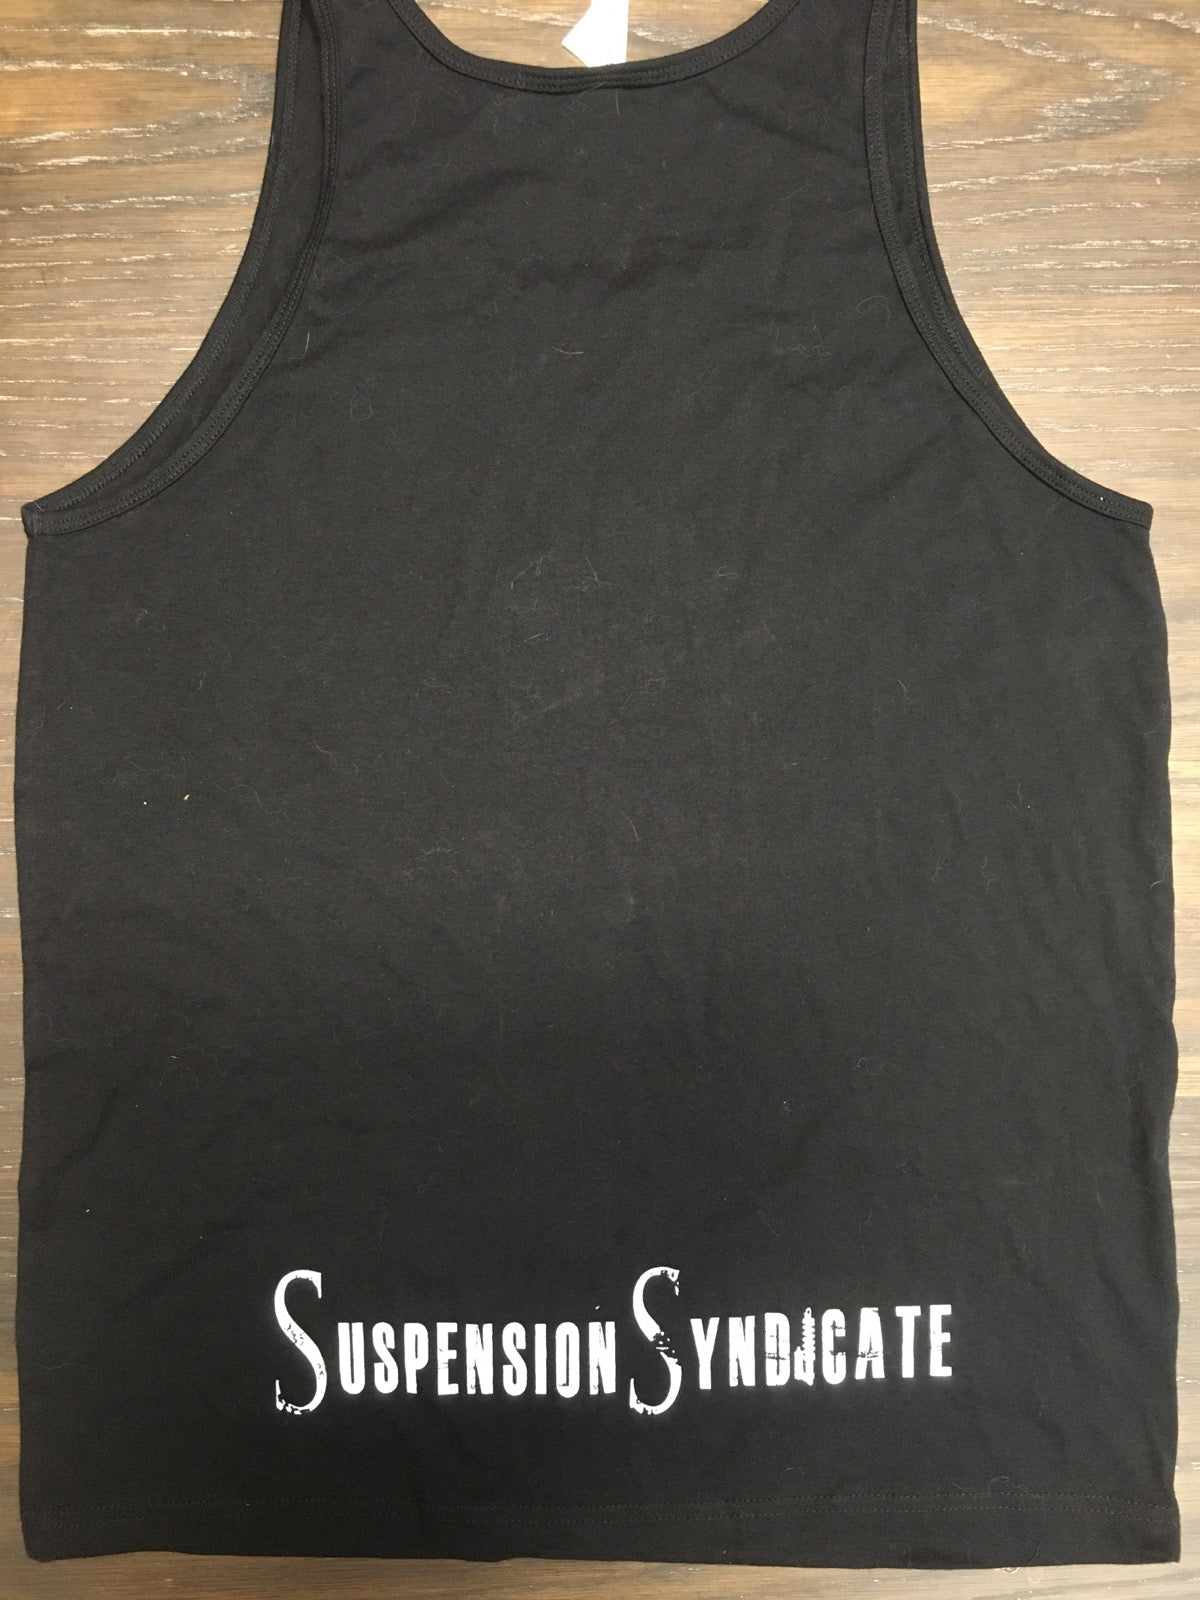 Suspension Syndicate Tonic sleeveless Tank Top T-shirt, black